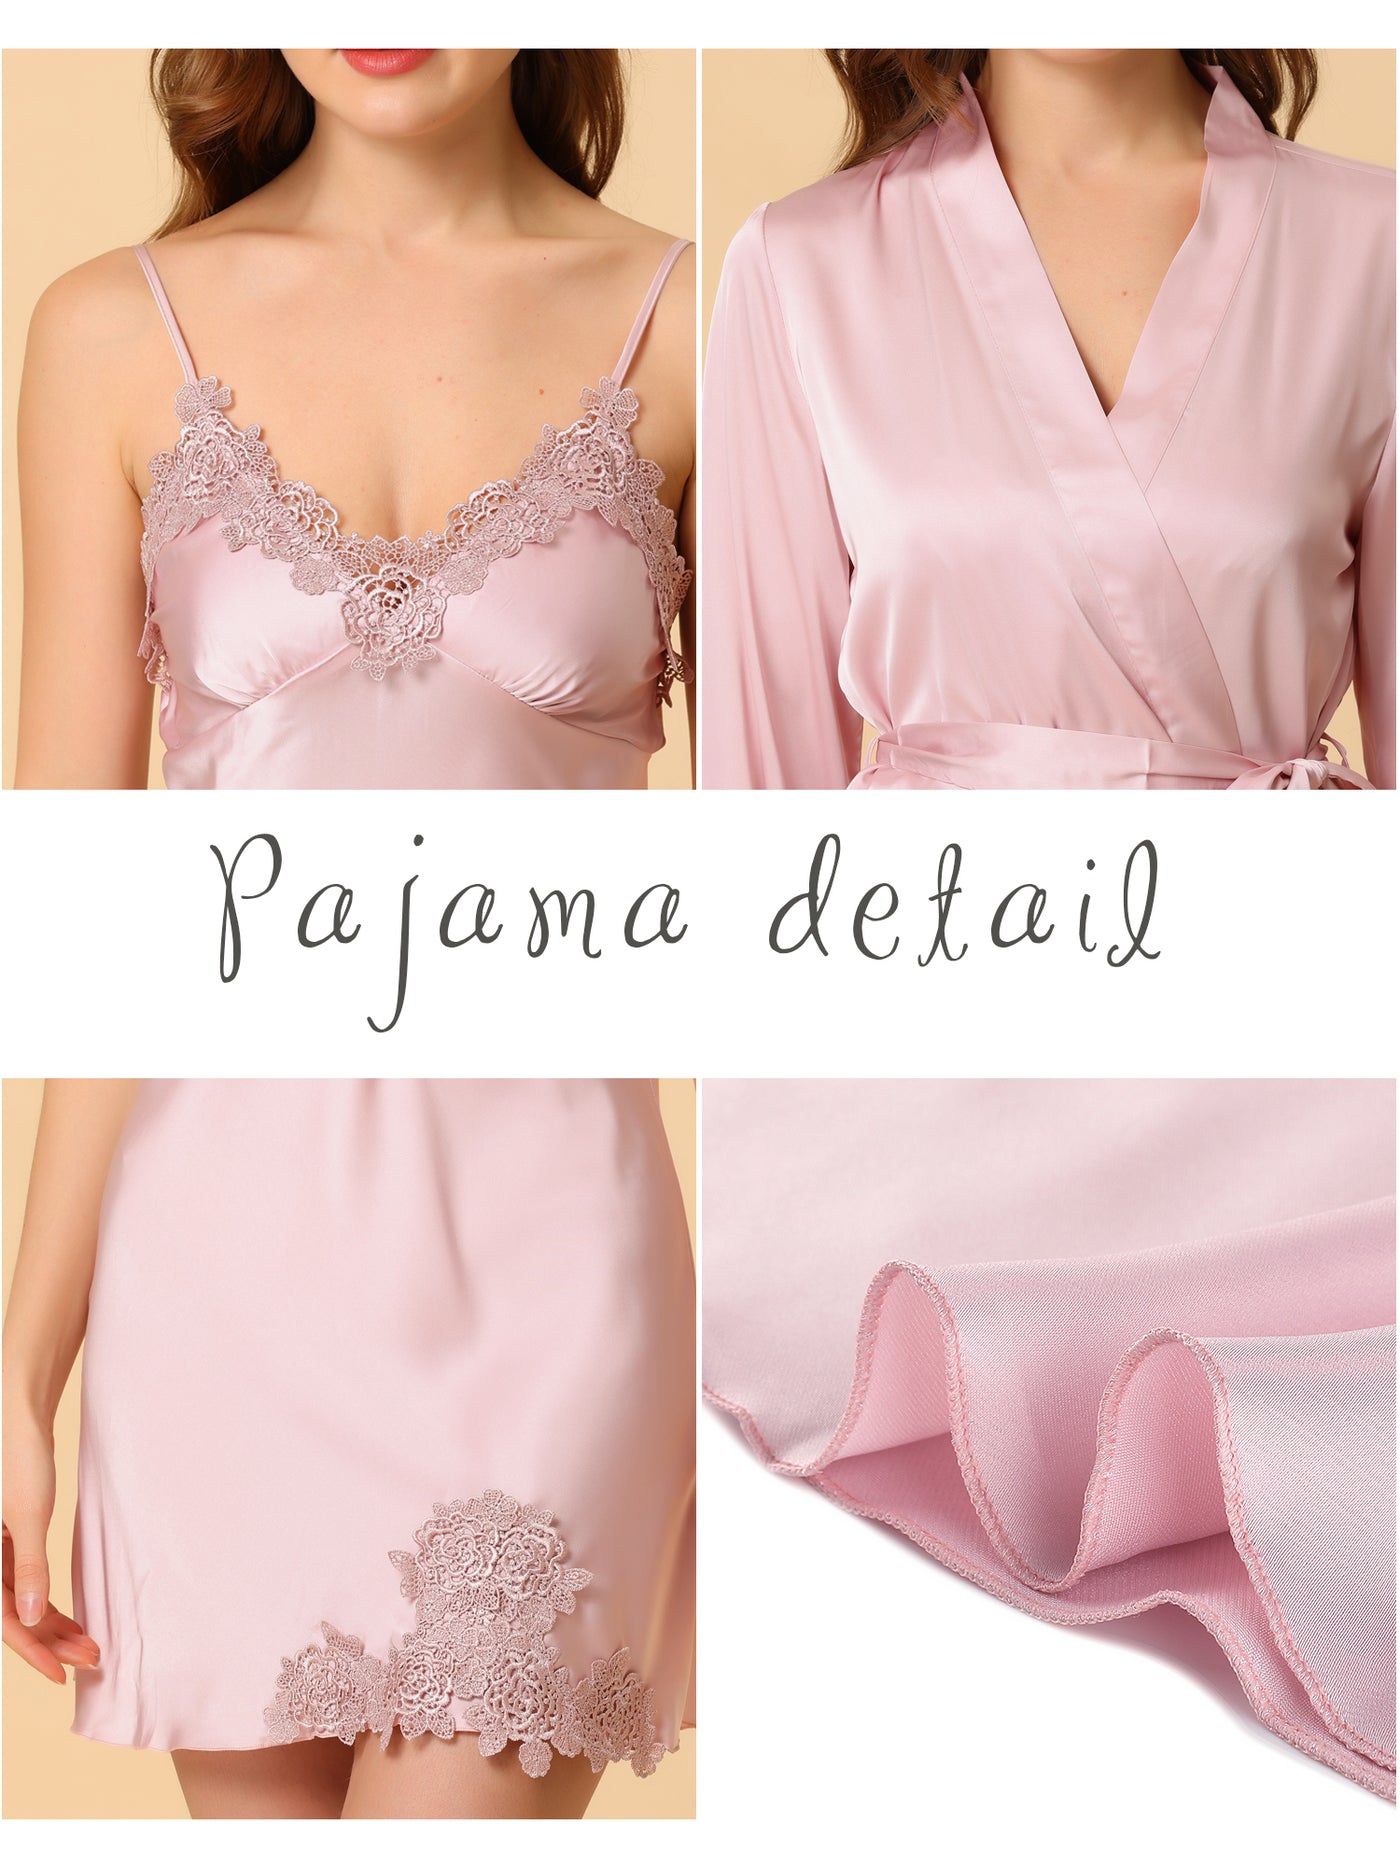 Bublédon Women's 2pcs Pajama Sleepwear Silk Cami Nightdress with Robe Satin Sets